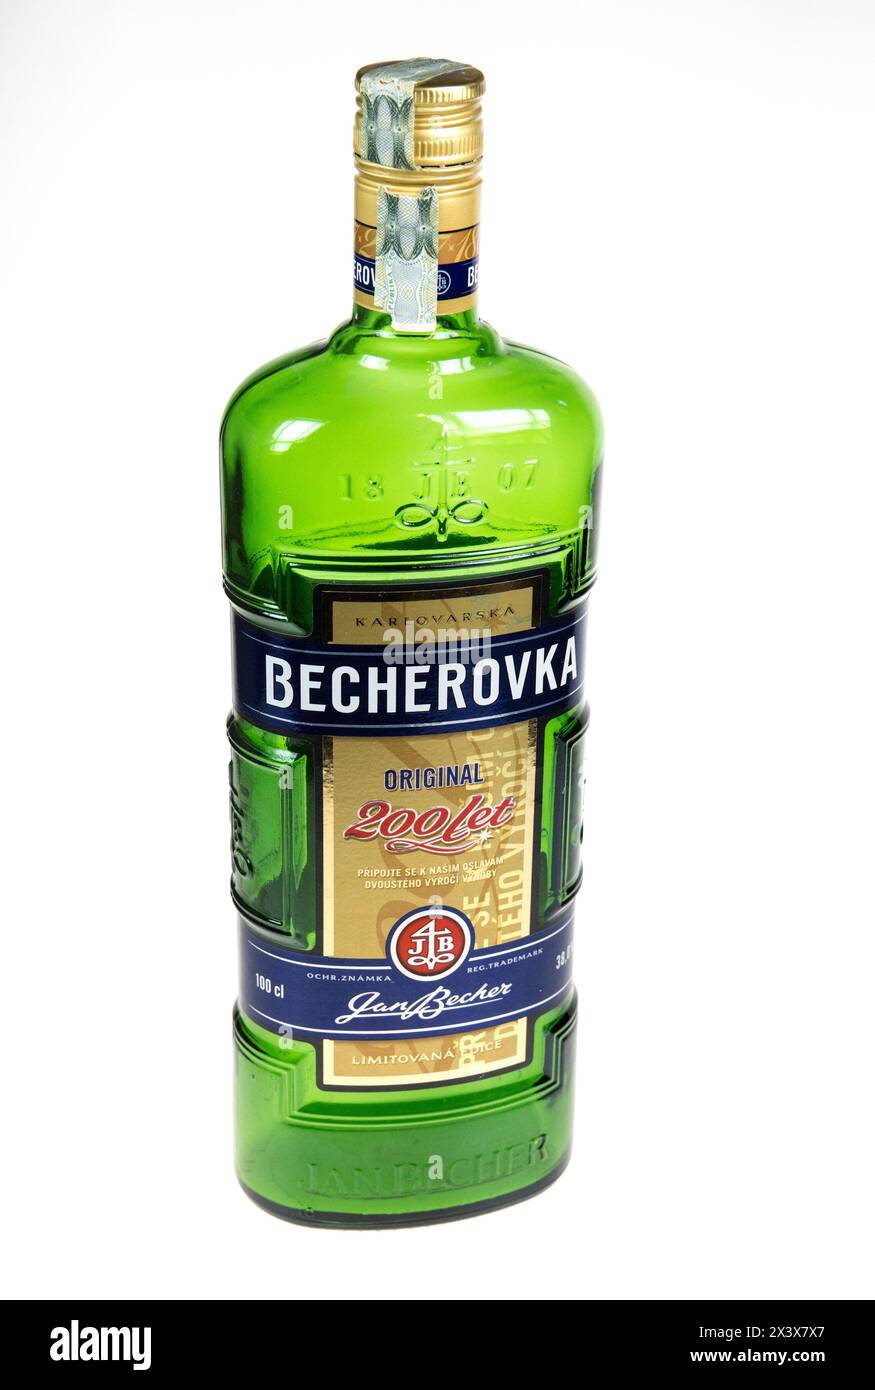 Becherovka herbal bitters drink 200th anniversary edition, Carlsbad, Czech Republic Stock Photo